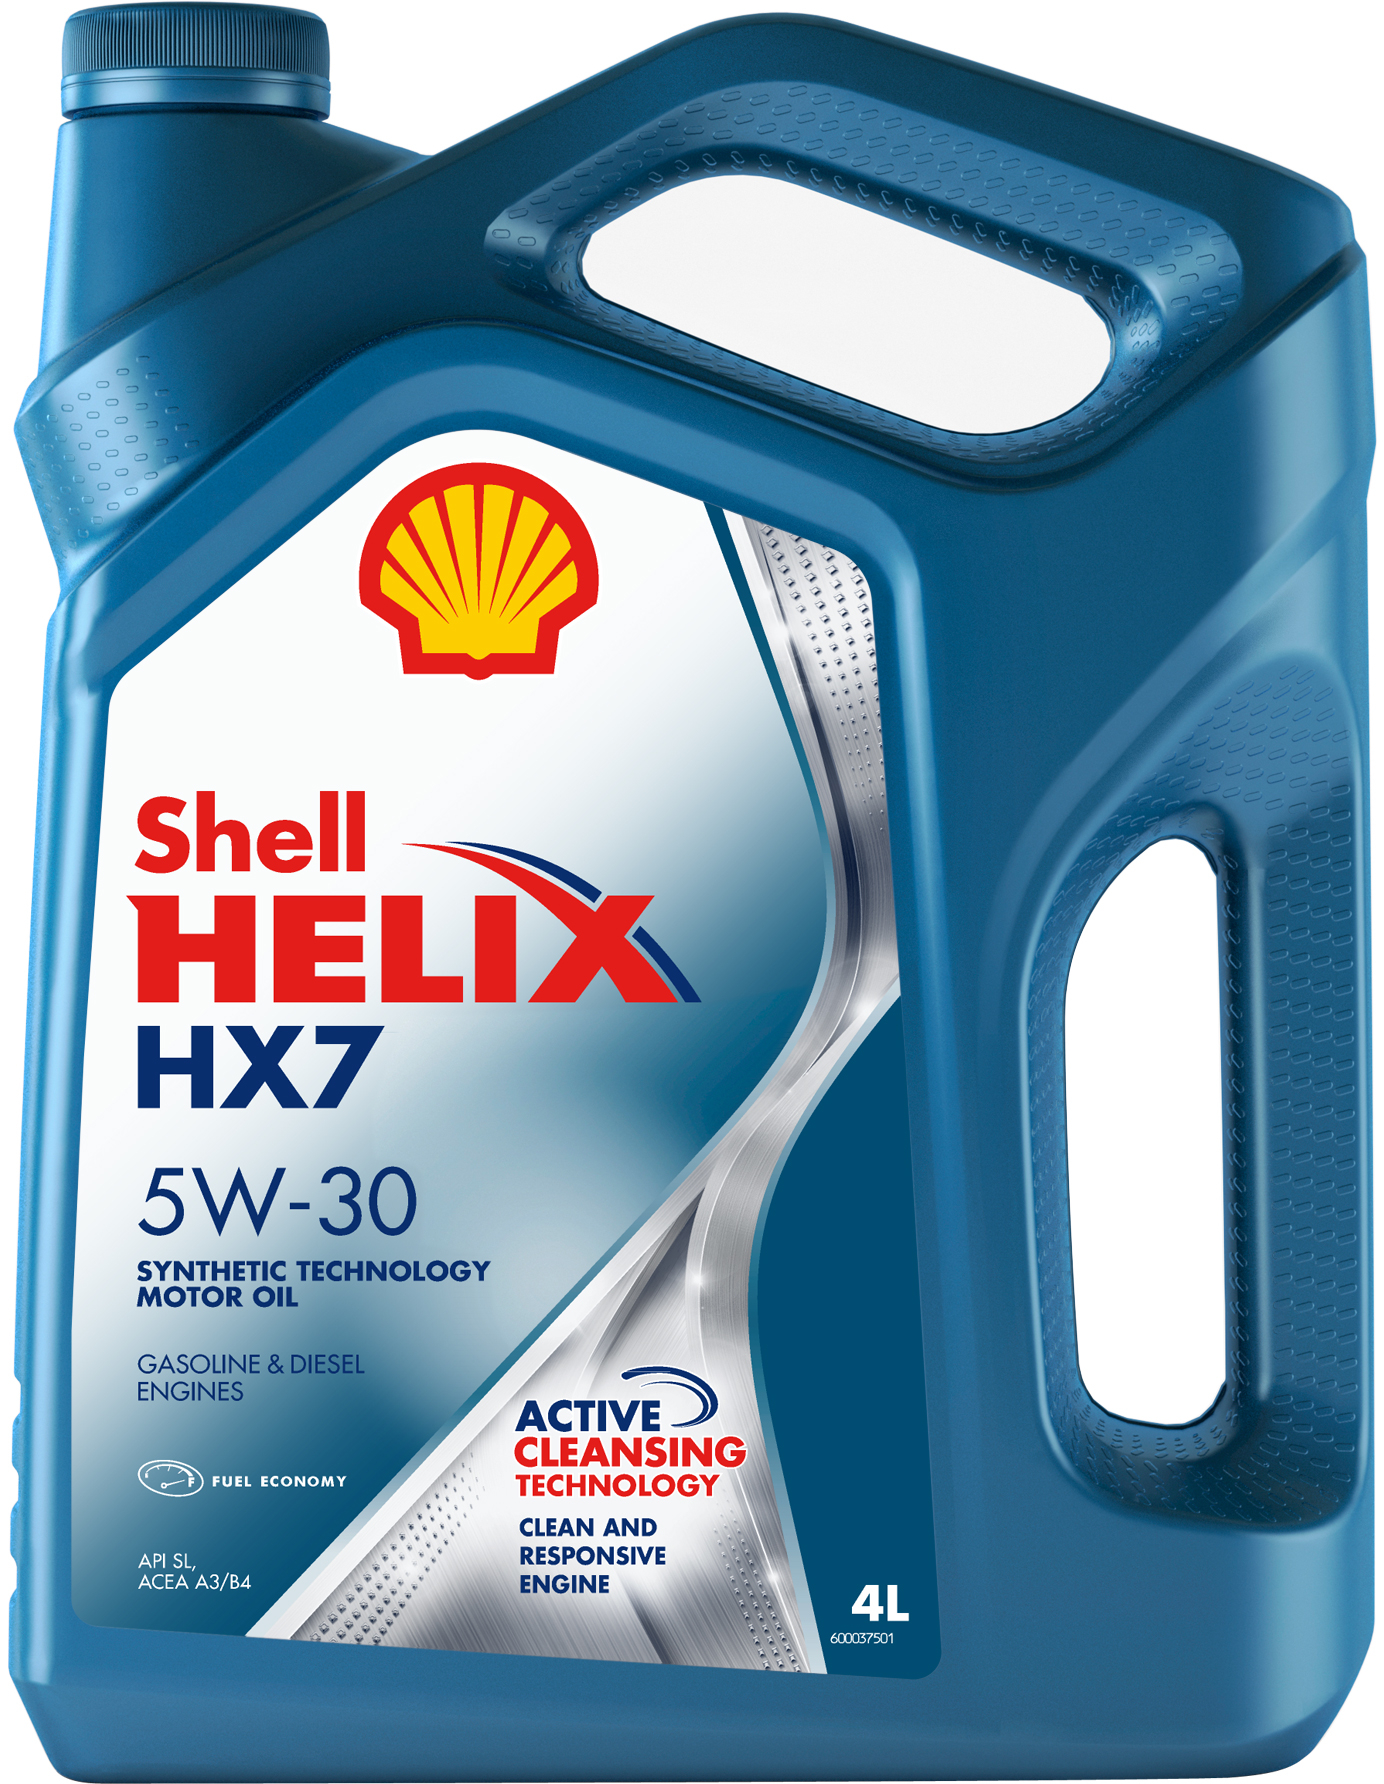 Моторное масло Shell Helix HX7 5W-30, 550046351, 4л